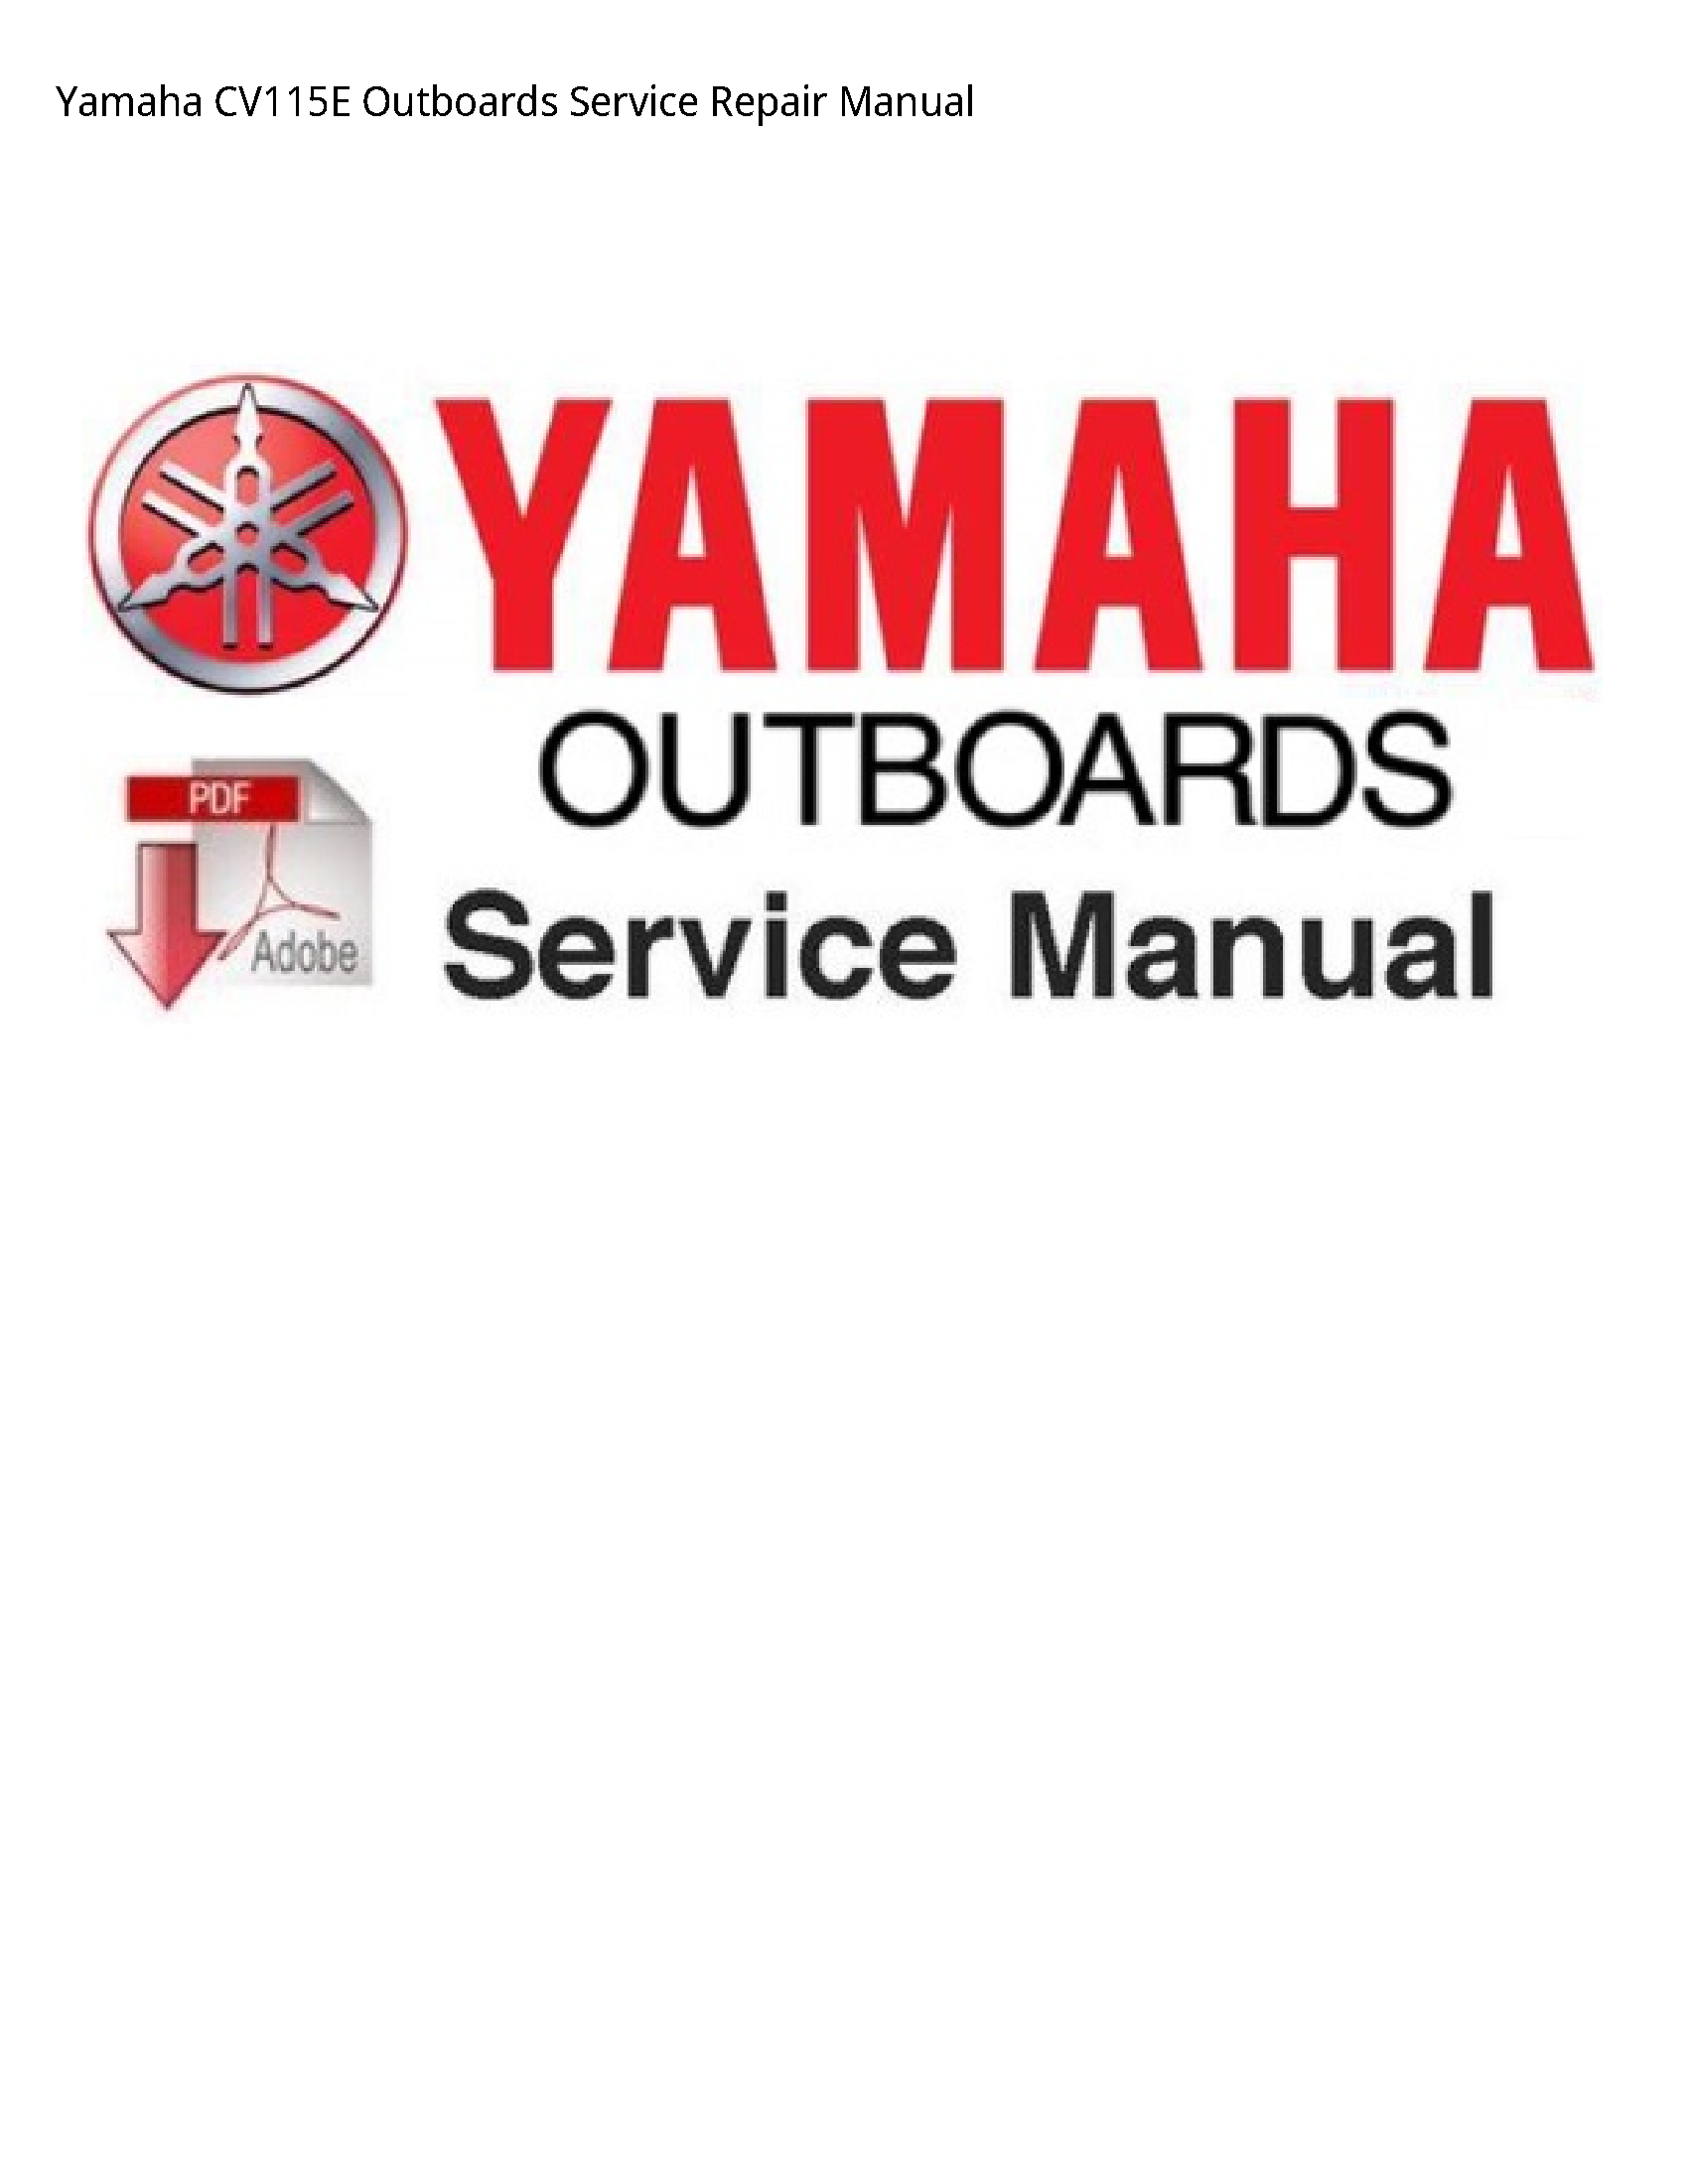 Yamaha CV115E Outboards manual